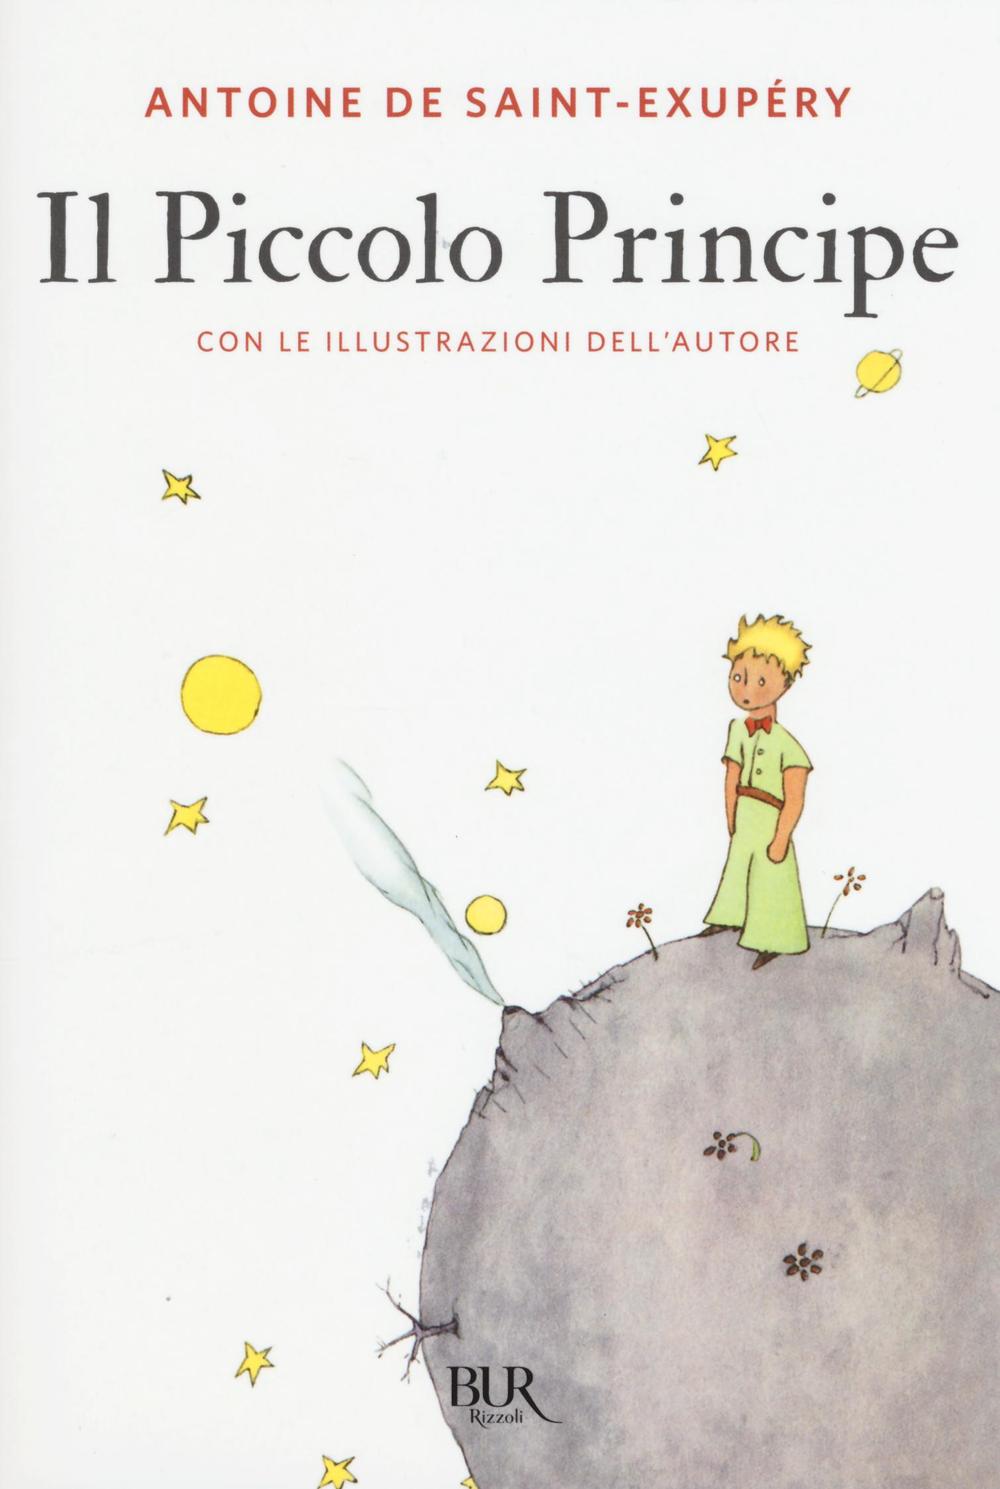 Book Il Piccolo Principe Antoine de Saint-Exupéry